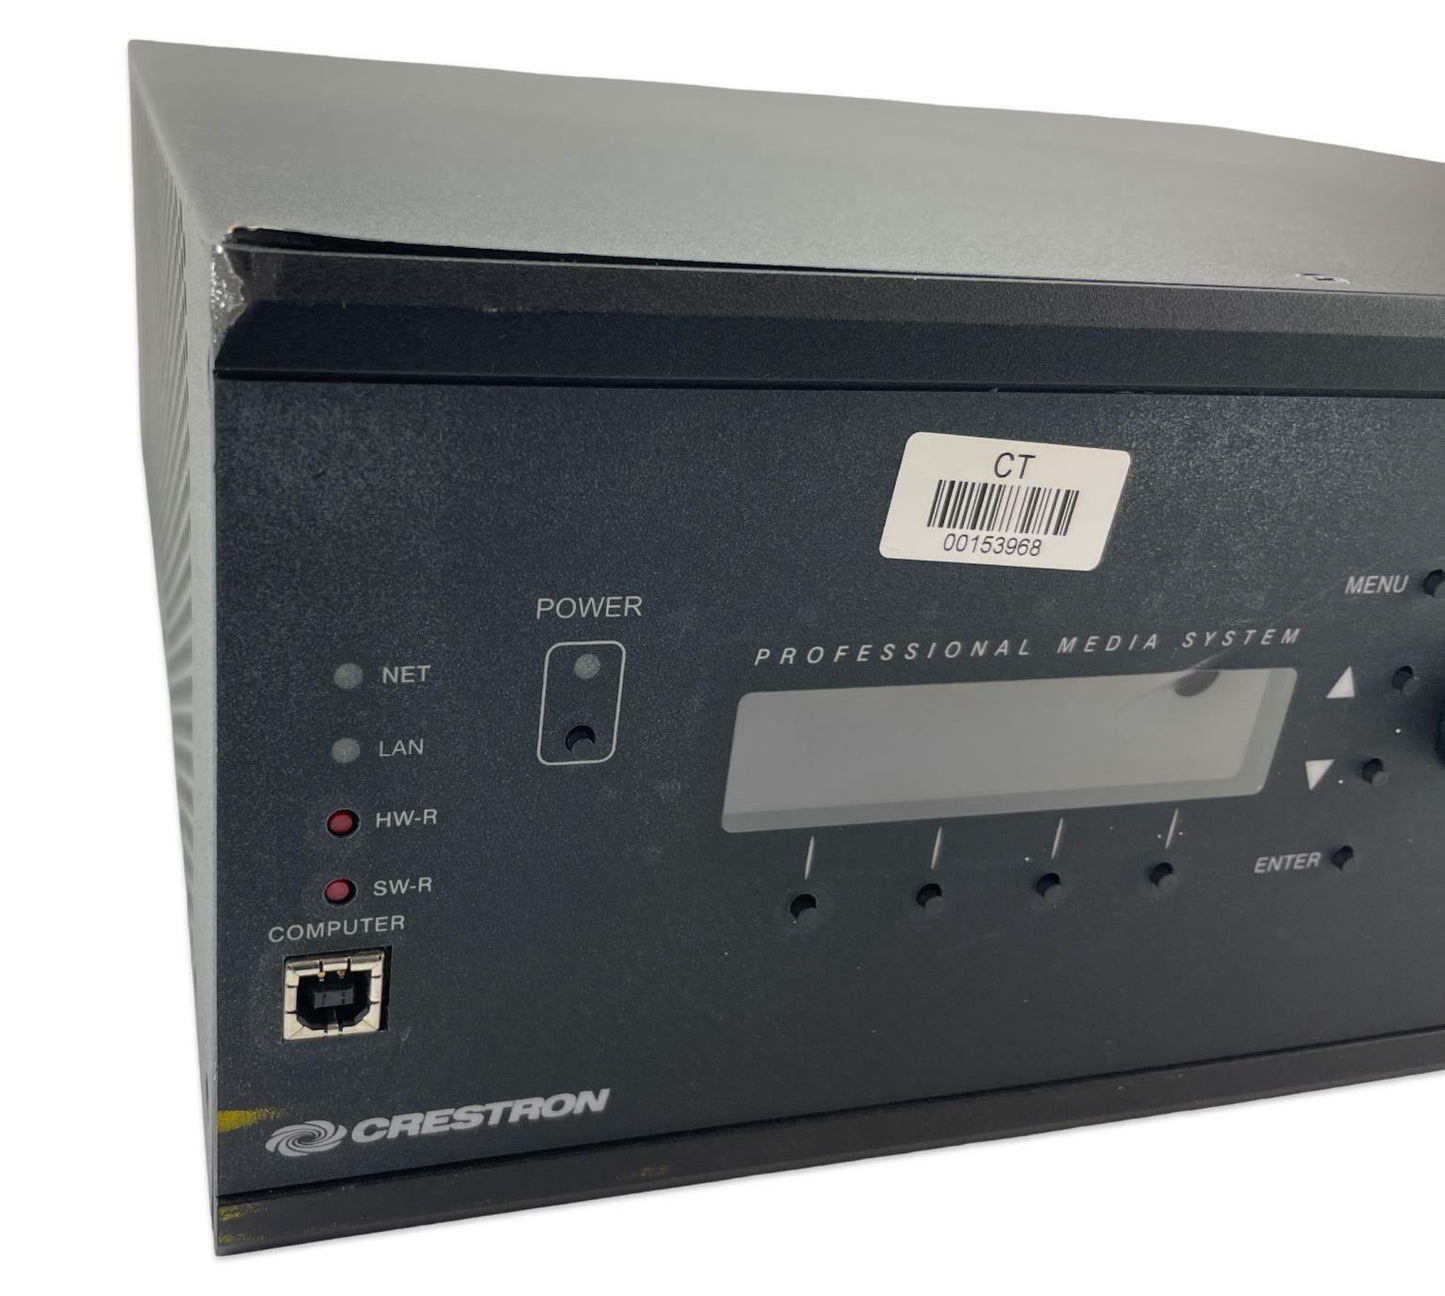 Crestron DMPS-300-C HDMI Digital Media Switcher Presentation System 300 - READ